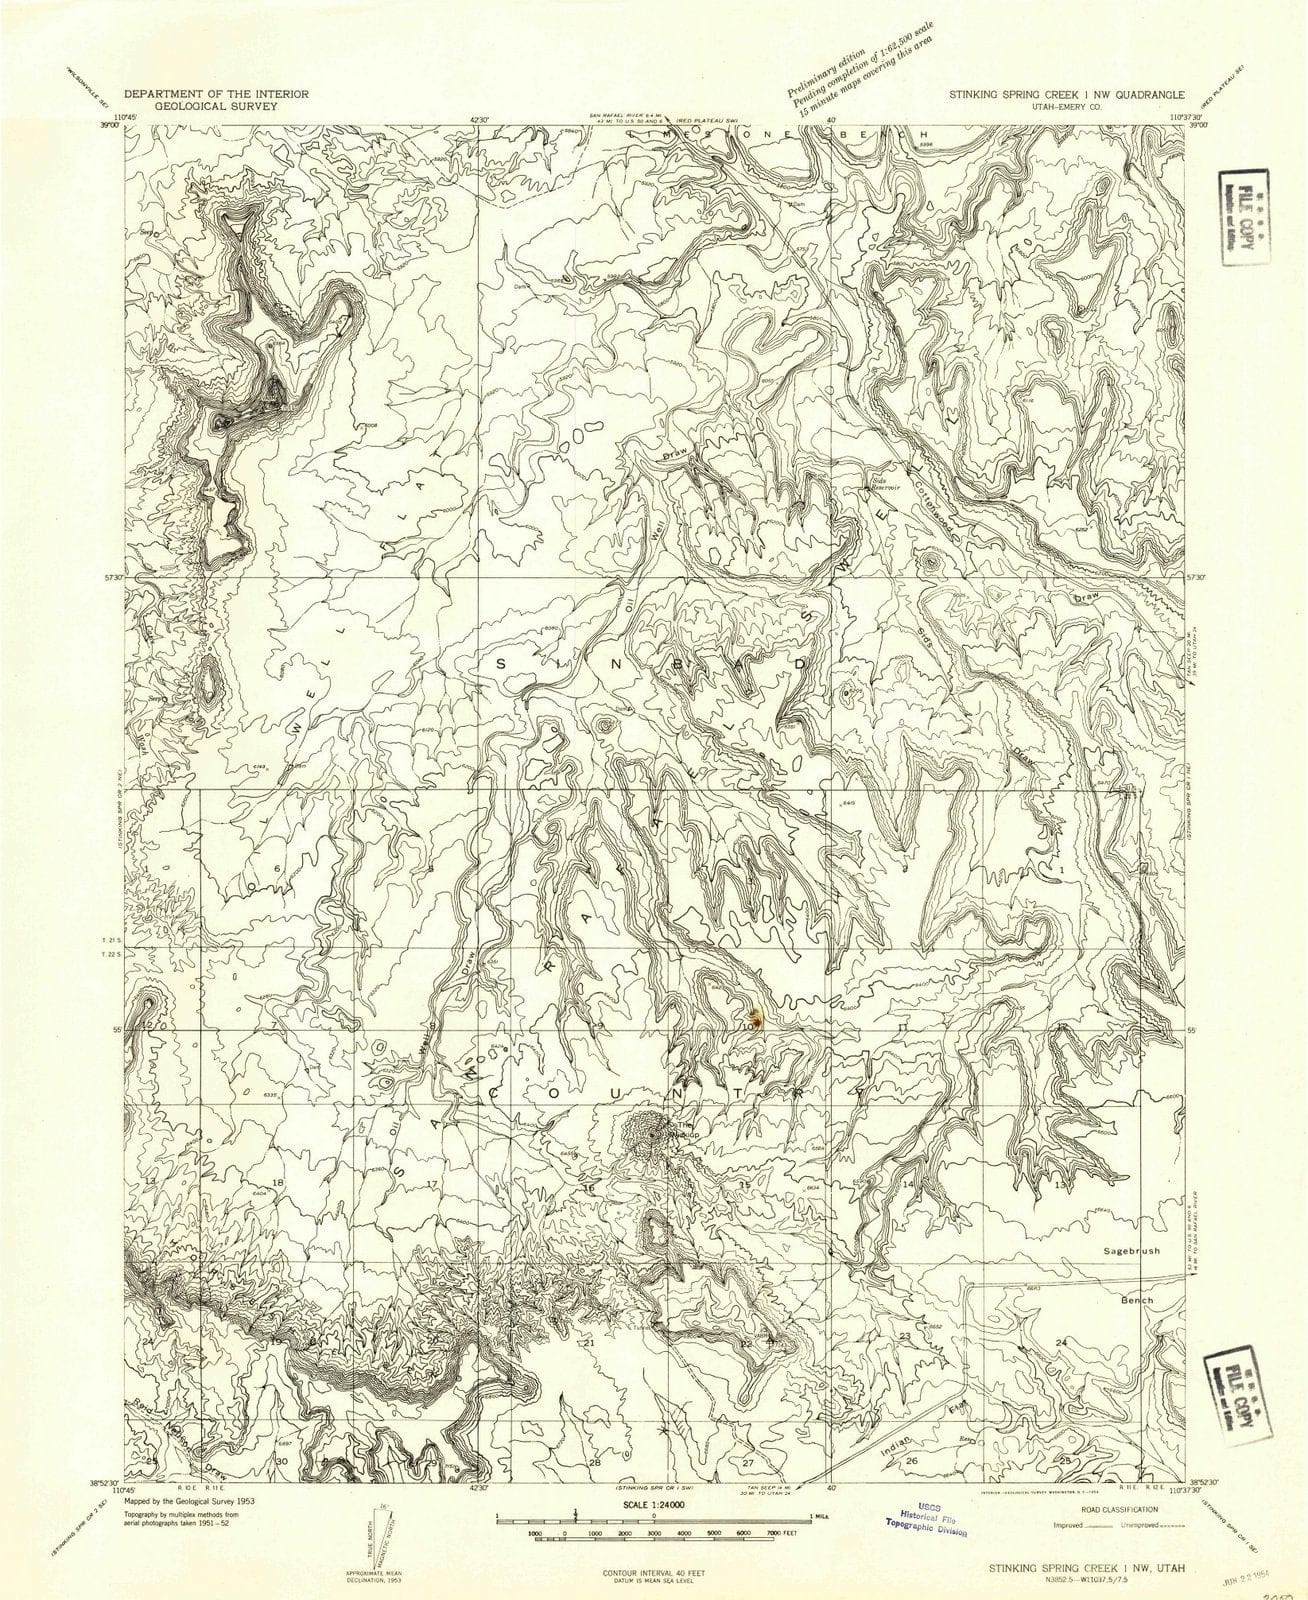 1954 Stinking Spring Creek 1, UT - Utah - USGS Topographic Map v2